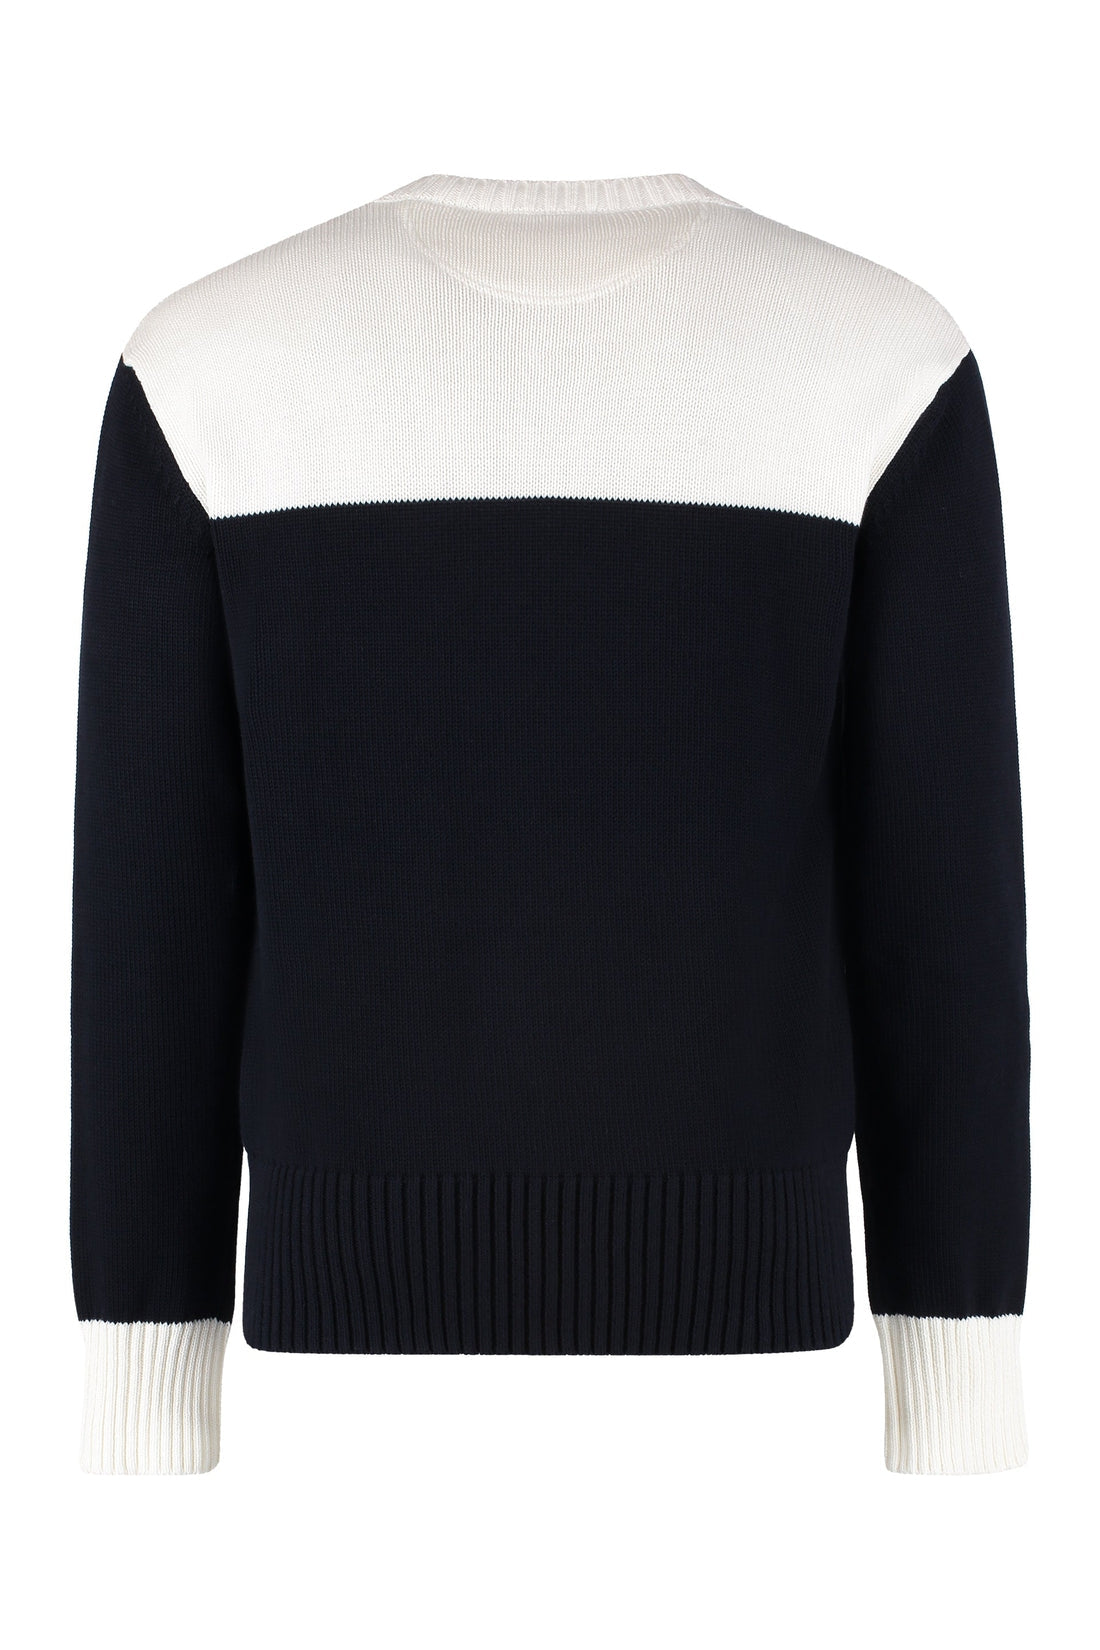 Valentino-OUTLET-SALE-Cotton crew-neck sweater-ARCHIVIST